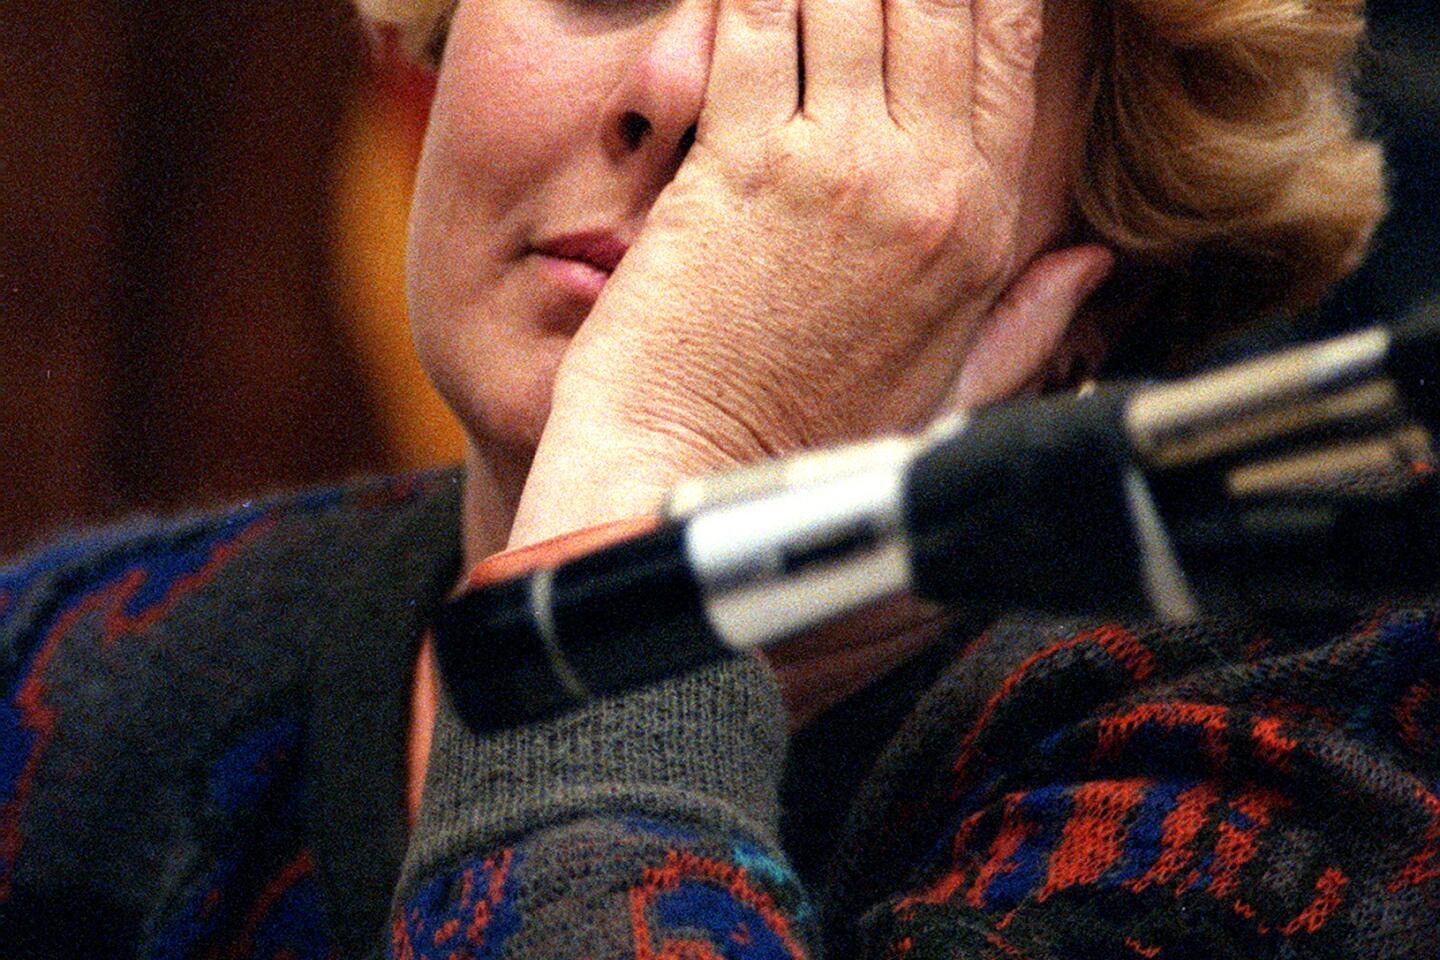 Broderick on Nov. 14, 1991, during her trial.